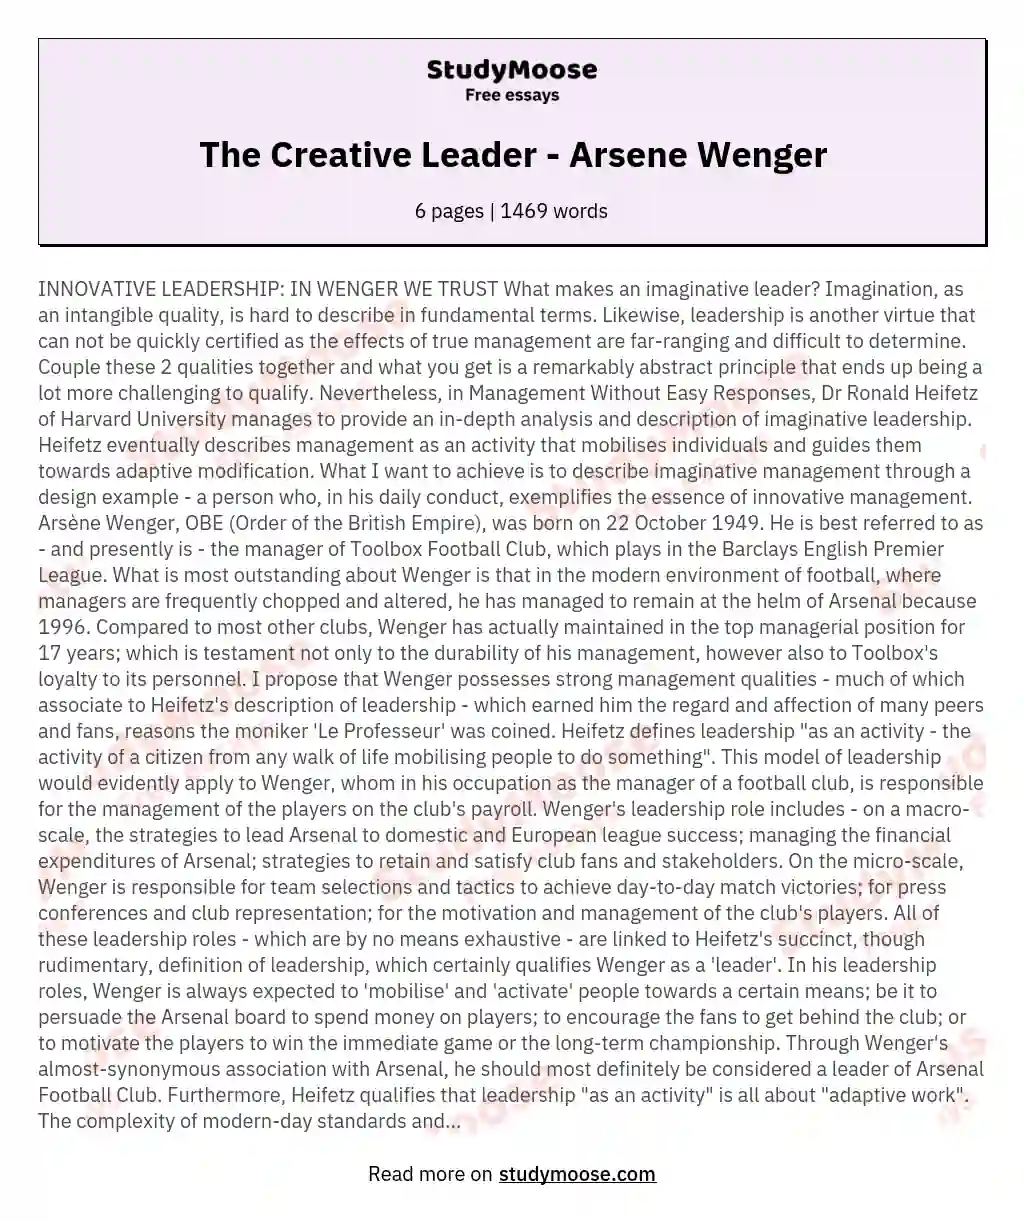 The Creative Leader - Arsene Wenger essay